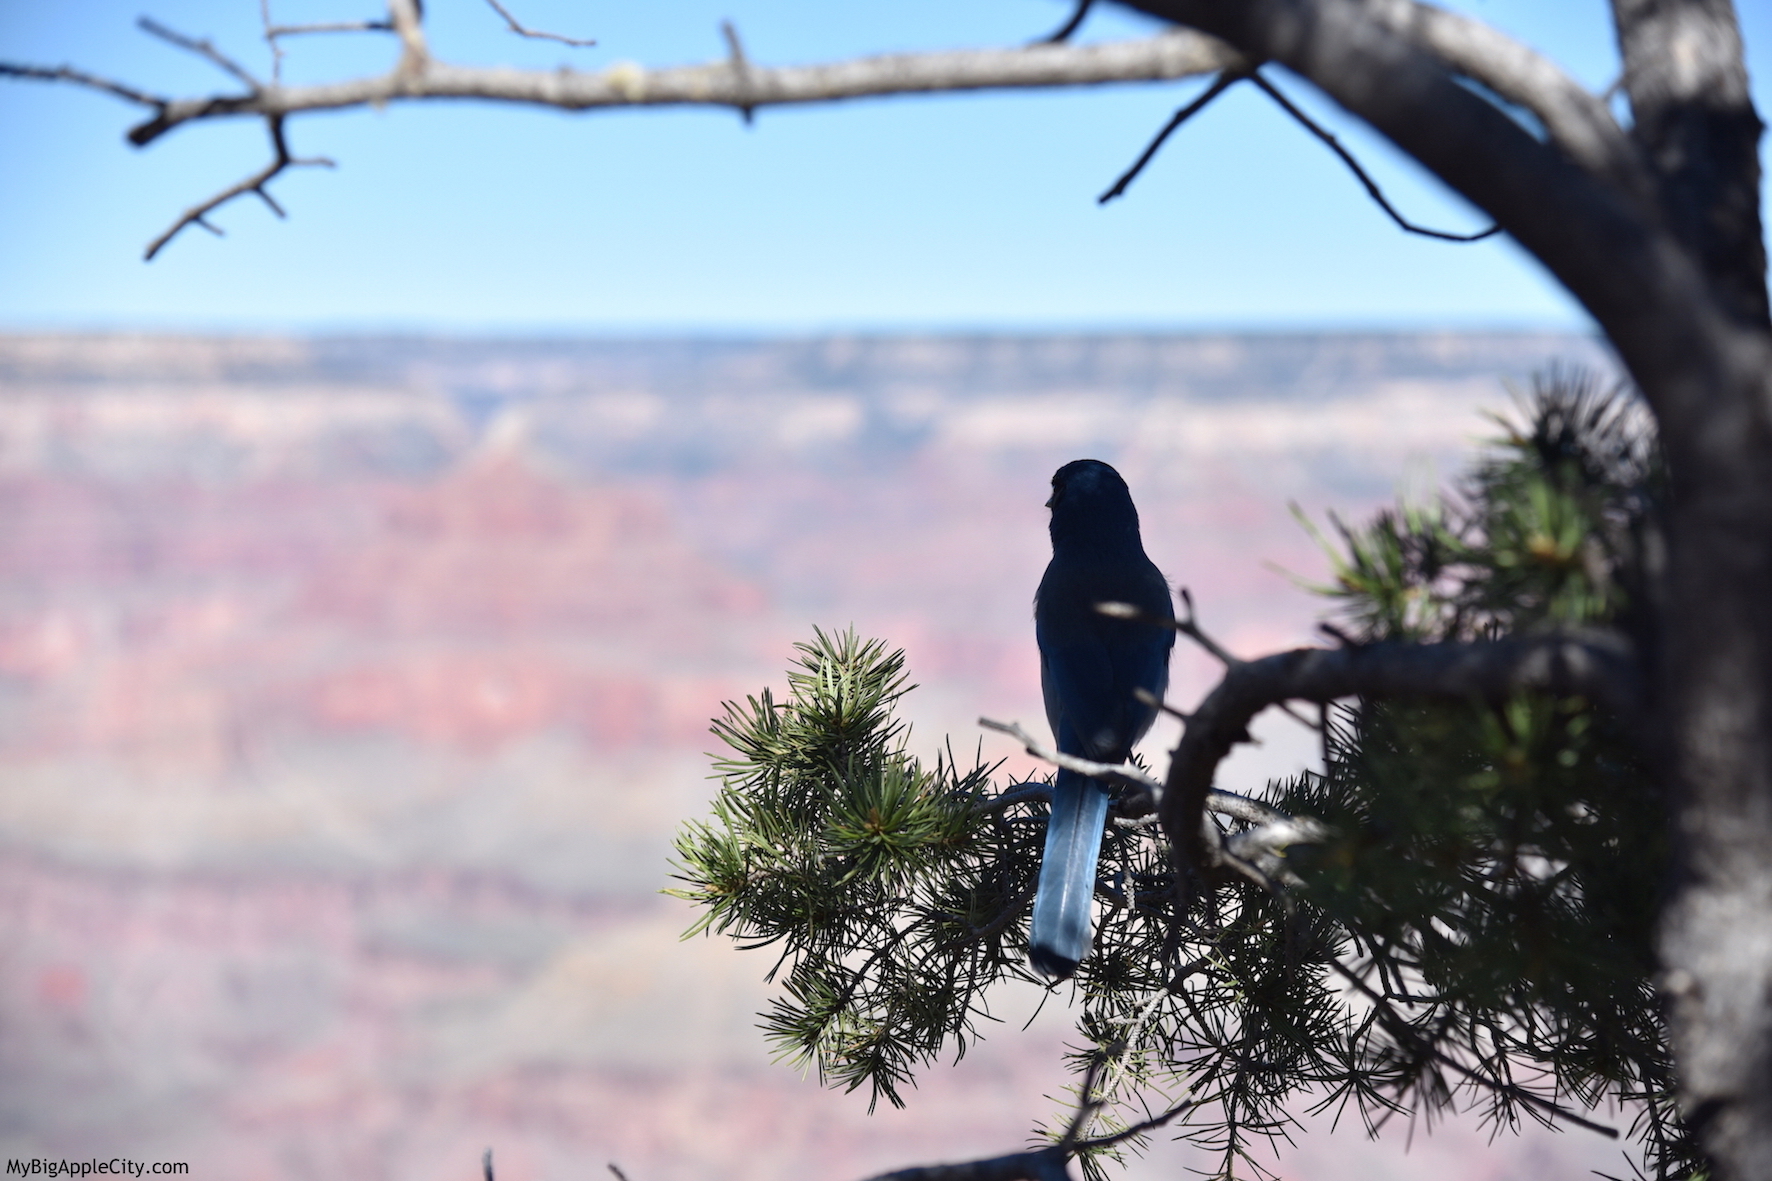 Grand-Canyon-USA-travel-blog-MyBigAppleCity